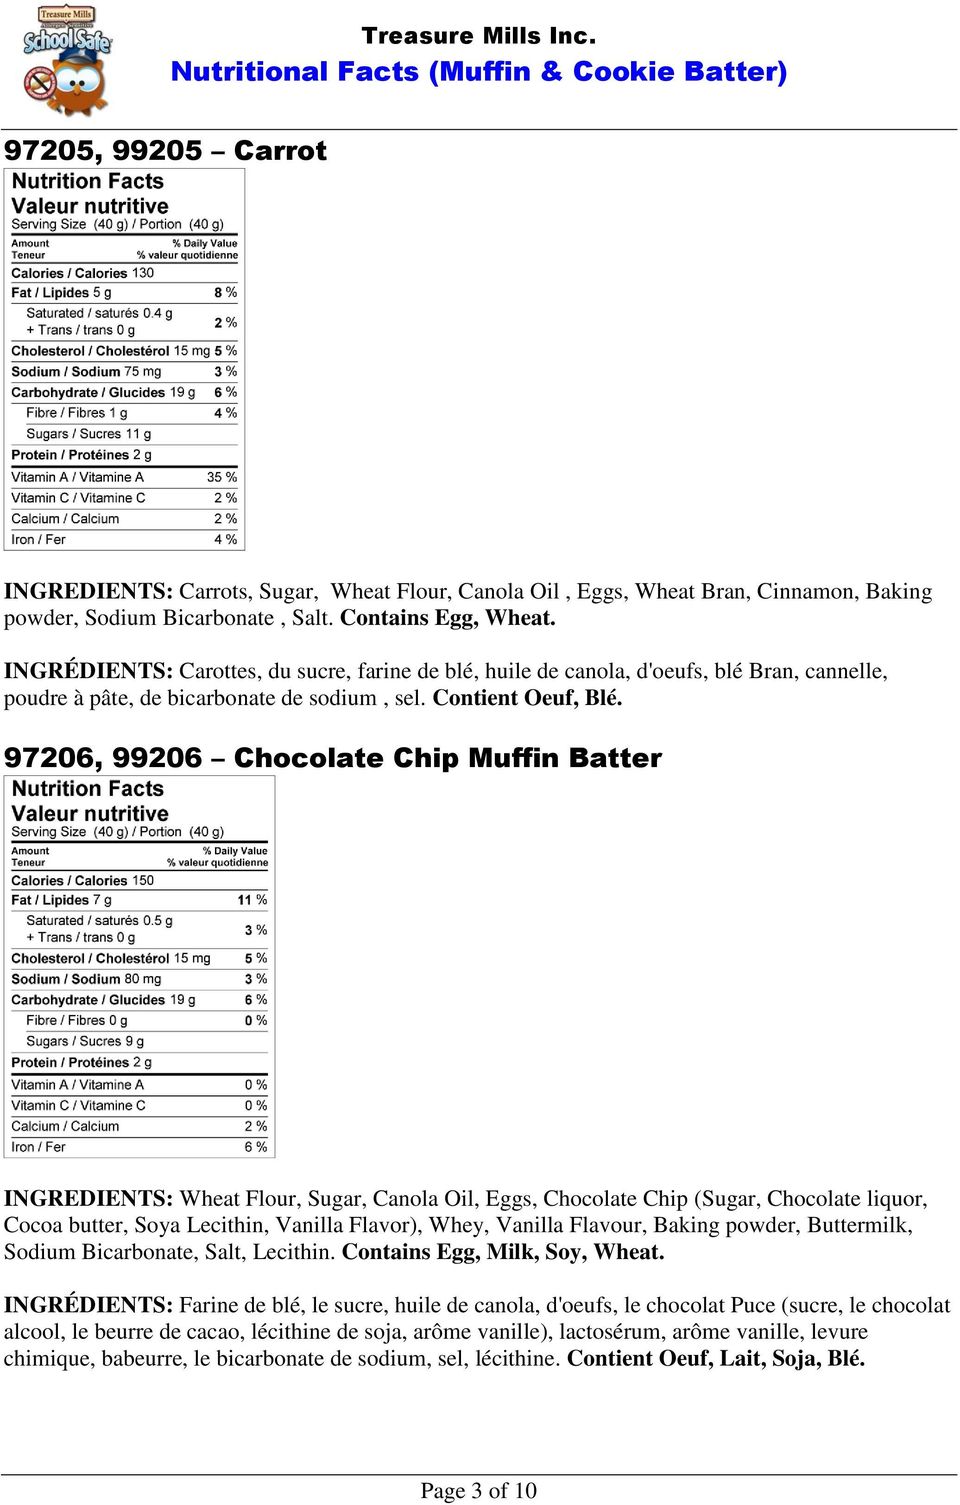 97206, 99206 Chocolate Chip Muffin Batter INGREDIENTS: Wheat Flour, Sugar, Canola Oil, Eggs, Chocolate Chip (Sugar, Chocolate liquor, Cocoa butter, Soya Lecithin, Vanilla Flavor), Whey, Vanilla